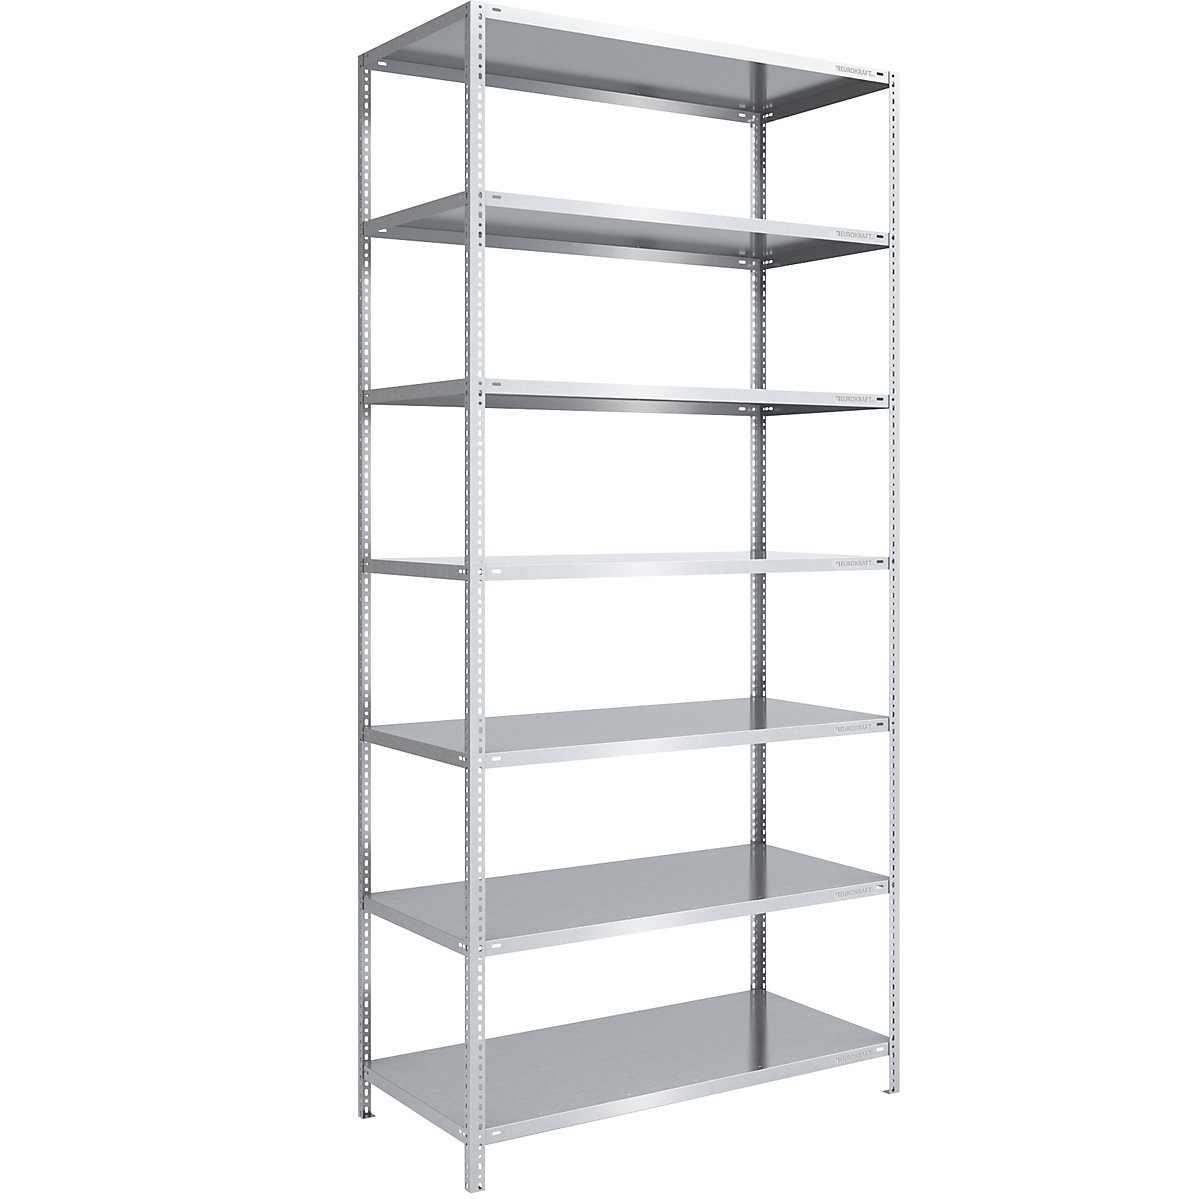 Bolt-together storage shelving, zinc plated, medium duty – eurokraft pro, shelf unit height 3000 mm, shelf width 1300 mm, depth 800 mm, standard shelf unit-8